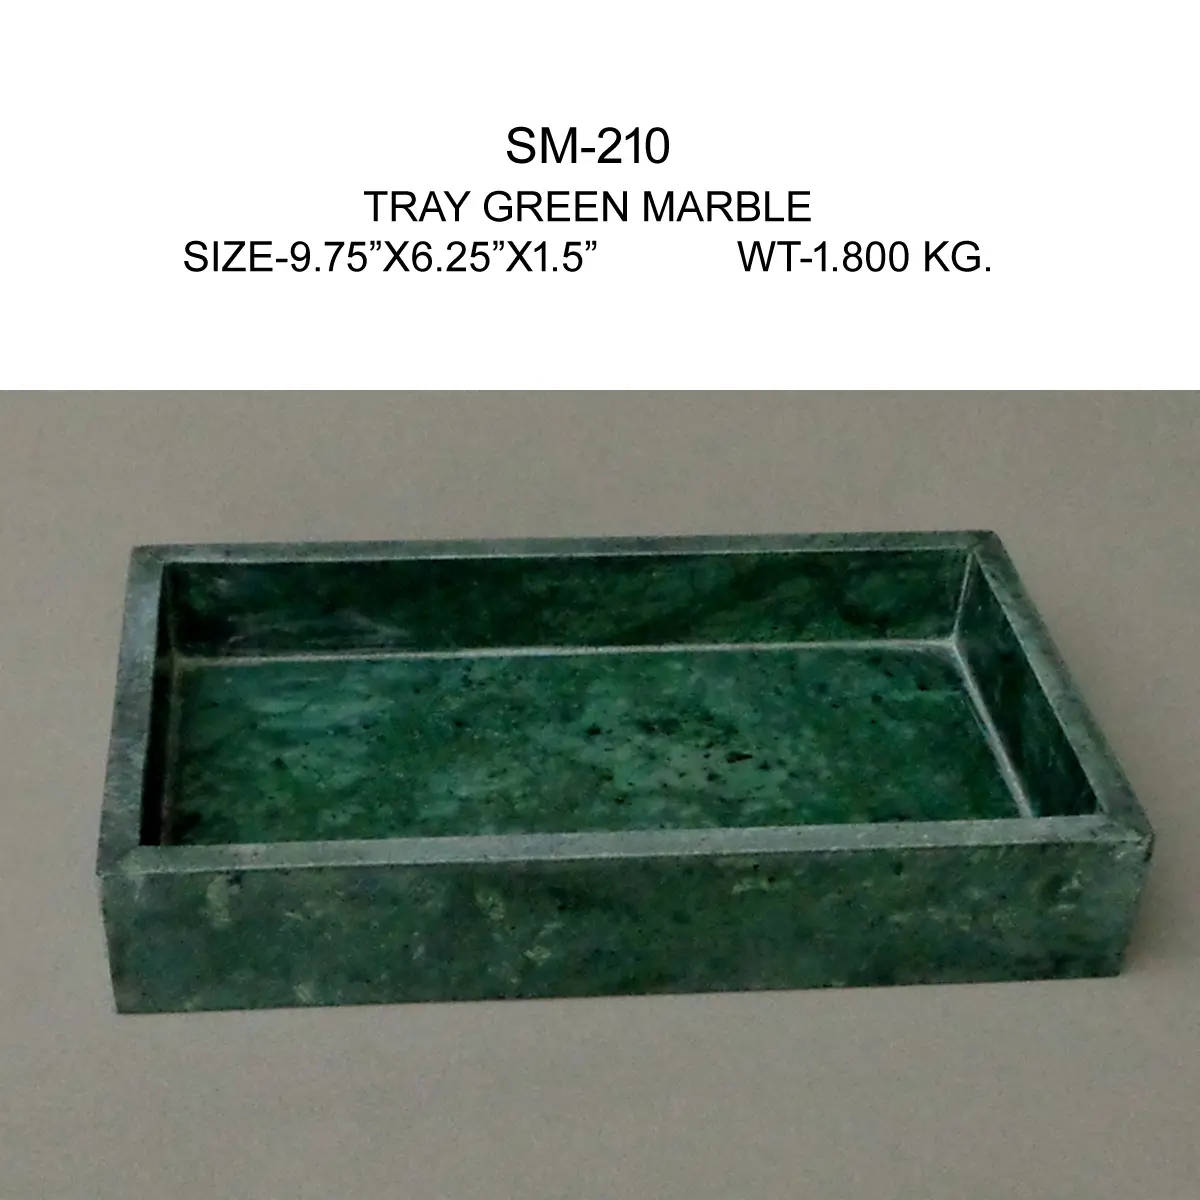 TRAY GREEN MARBLE